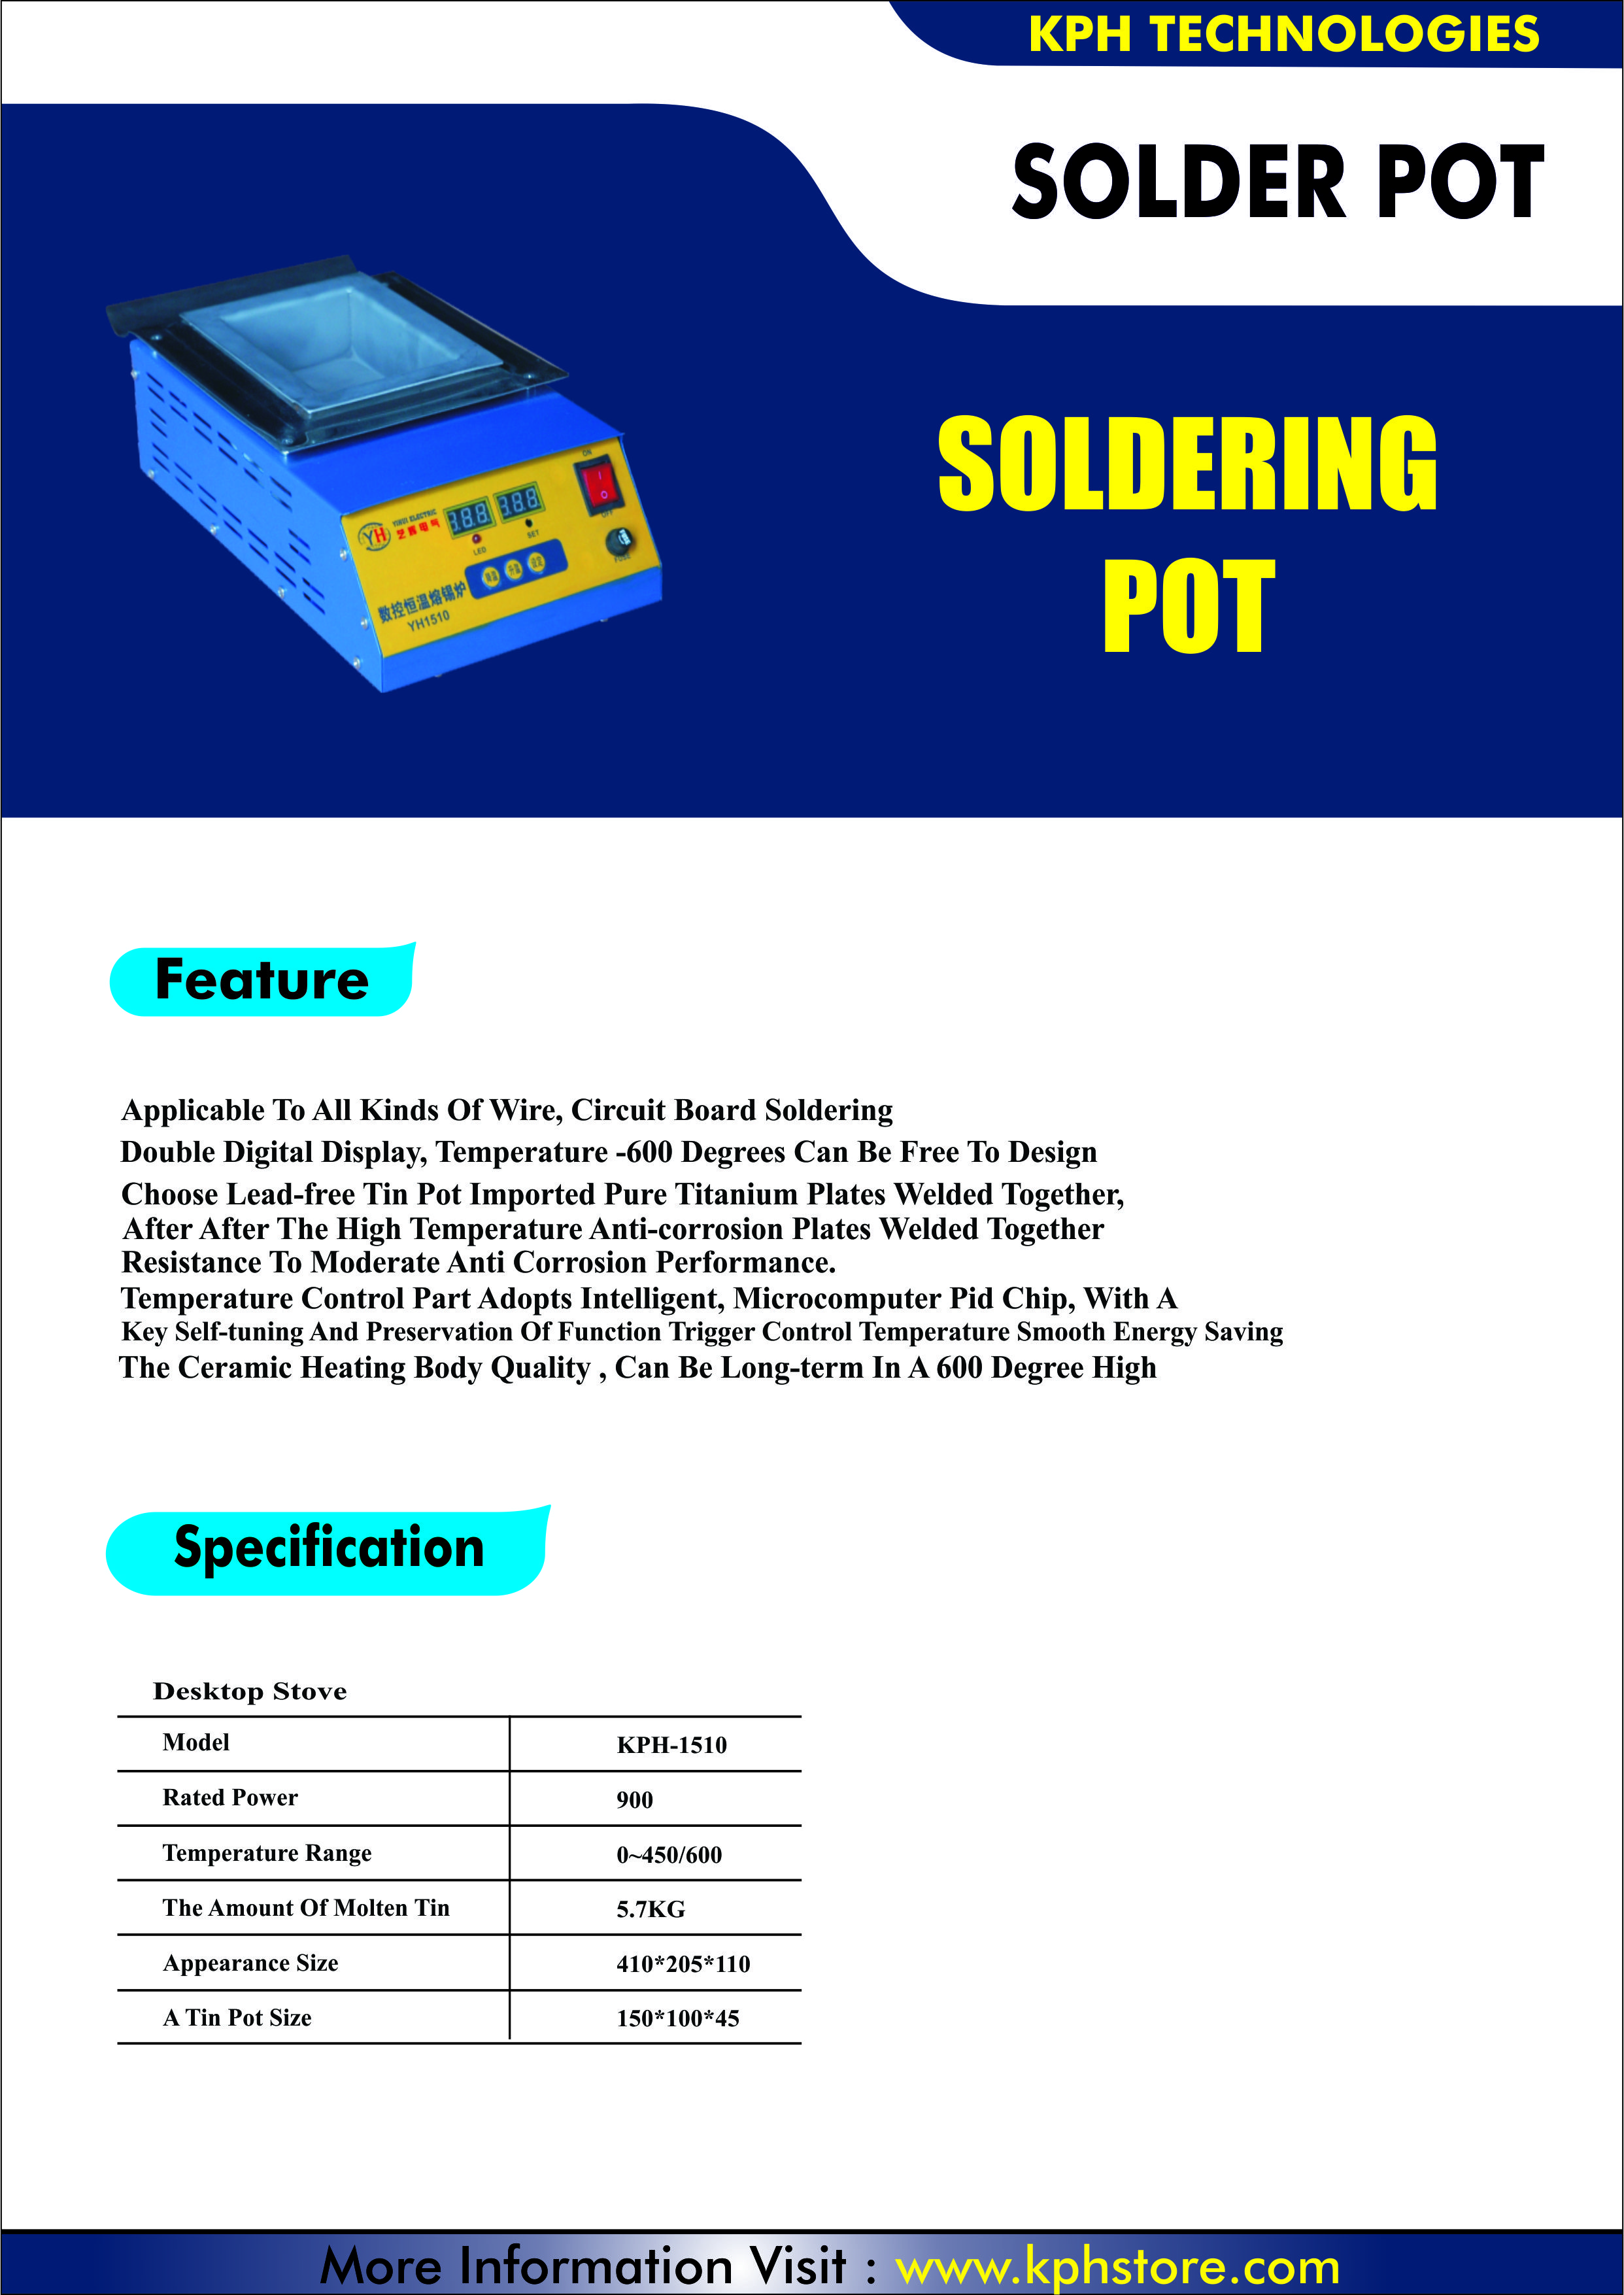 Mini Titanium-Plated Solder Pot for Fast Repairs - China Repair